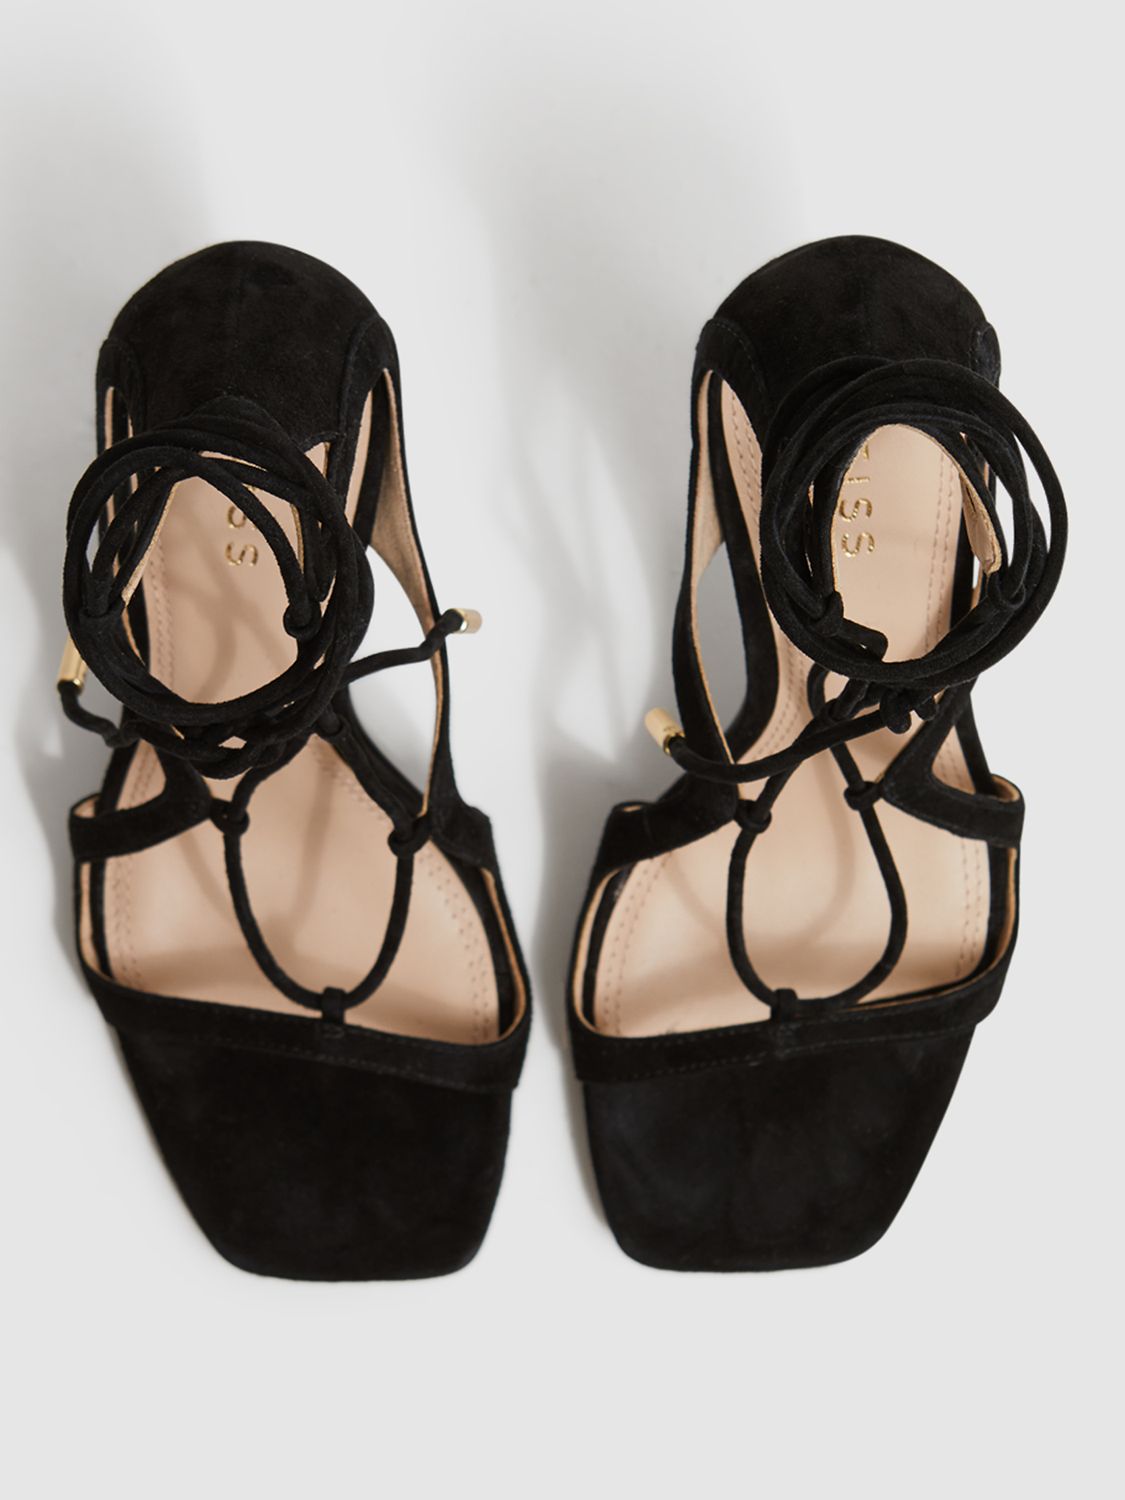 Reiss Kate Cross Strap High Heel Suede Sandals, Black, 3